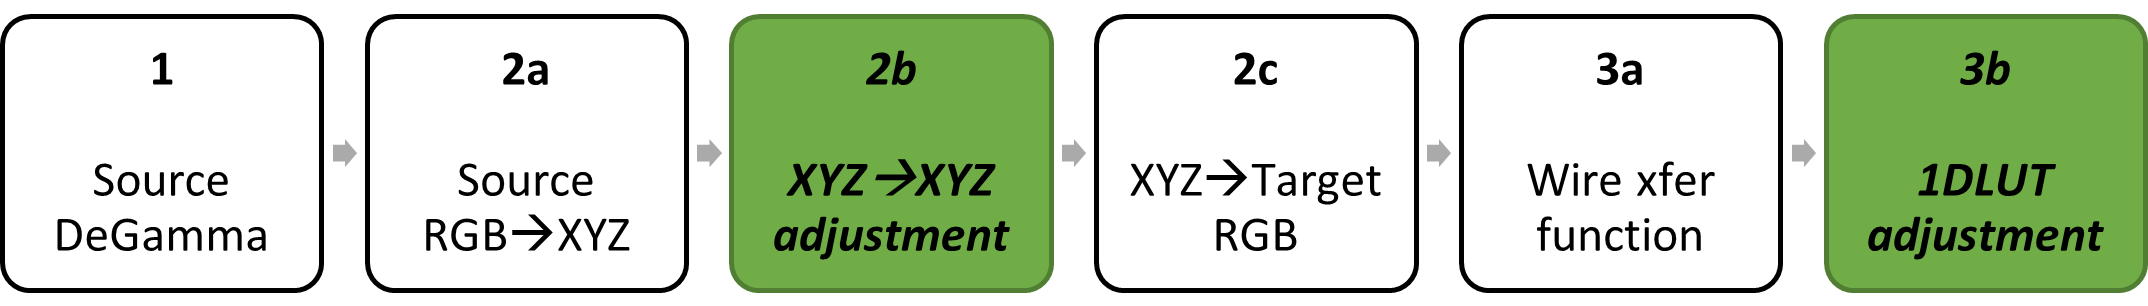 block diagram: source degamma; color matrix decomposed into source RGB to XYZ, XYZ to XYZ, and XYZ to target RGB; target regamma decomposed into wire transfer function, 1DLUT adjustment